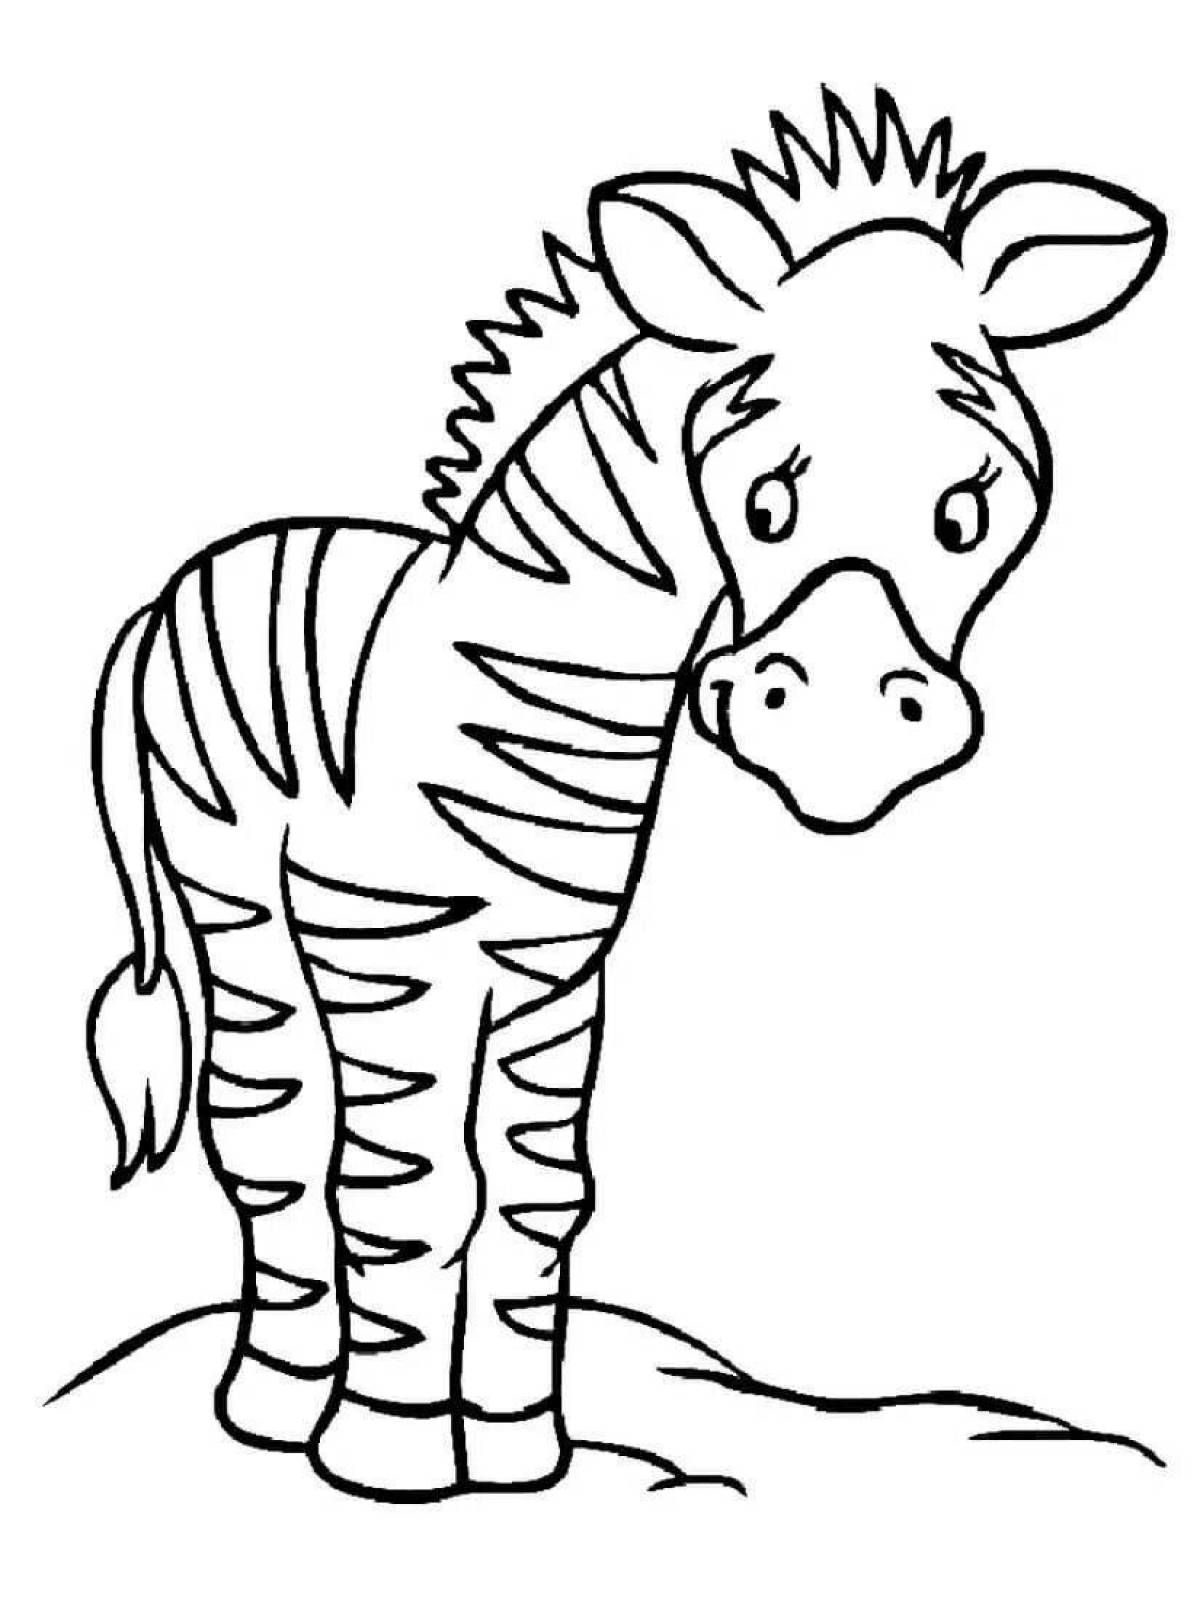 Fun zebra coloring book for preschoolers 3-4 years old